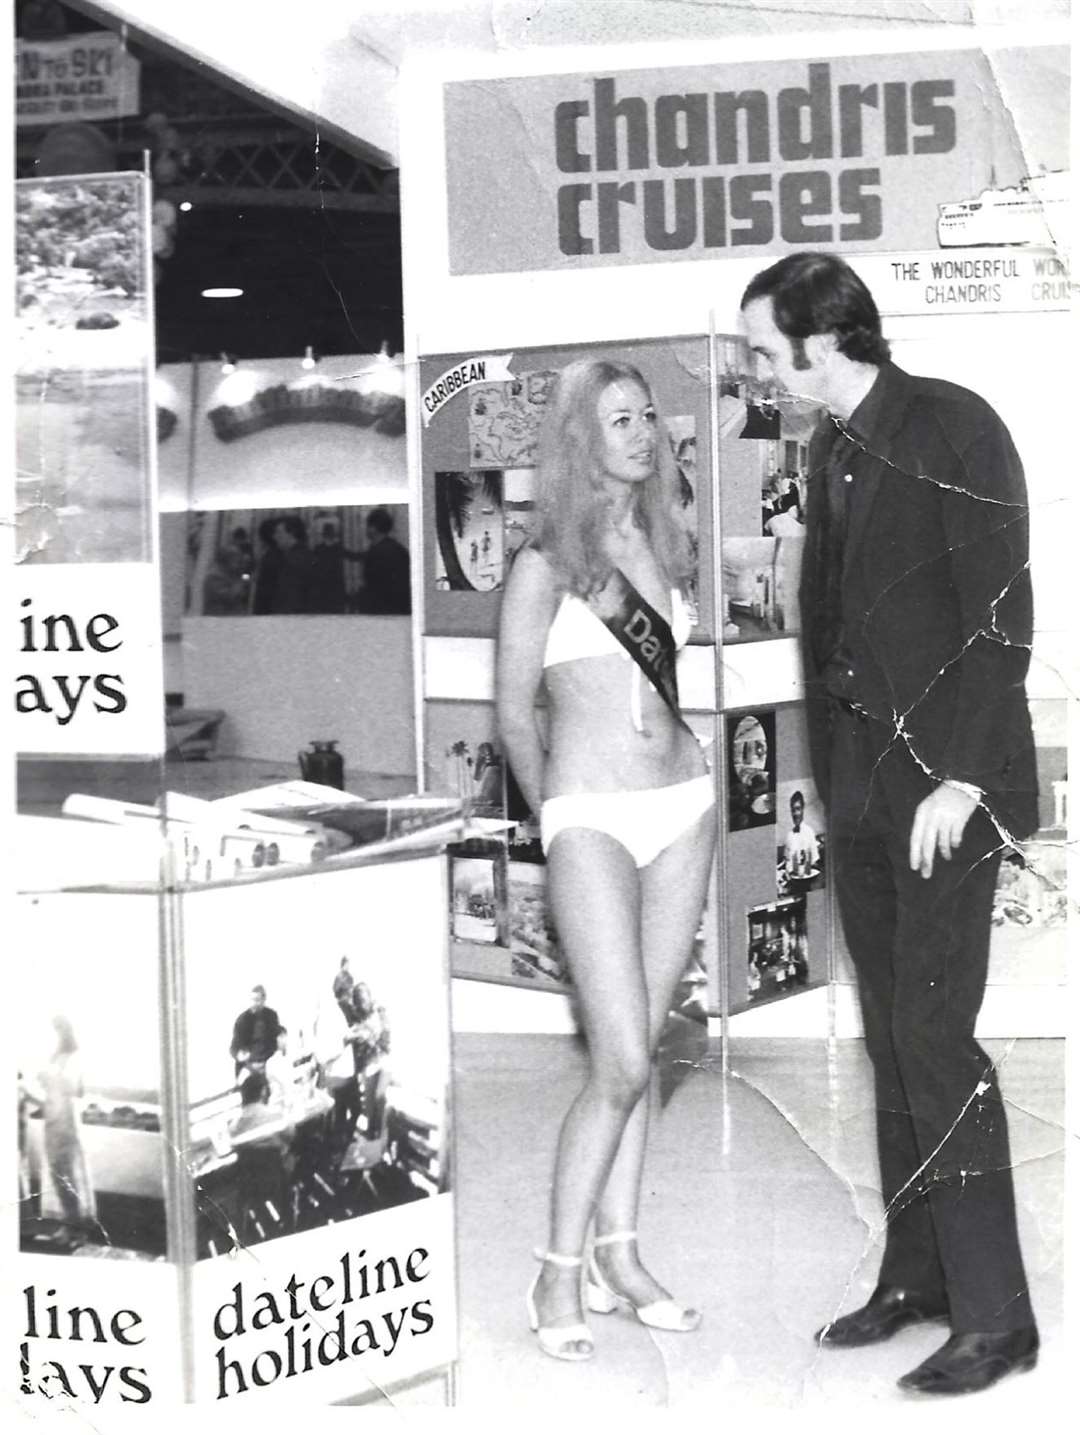 John Cleese chats with bikini model Valerie